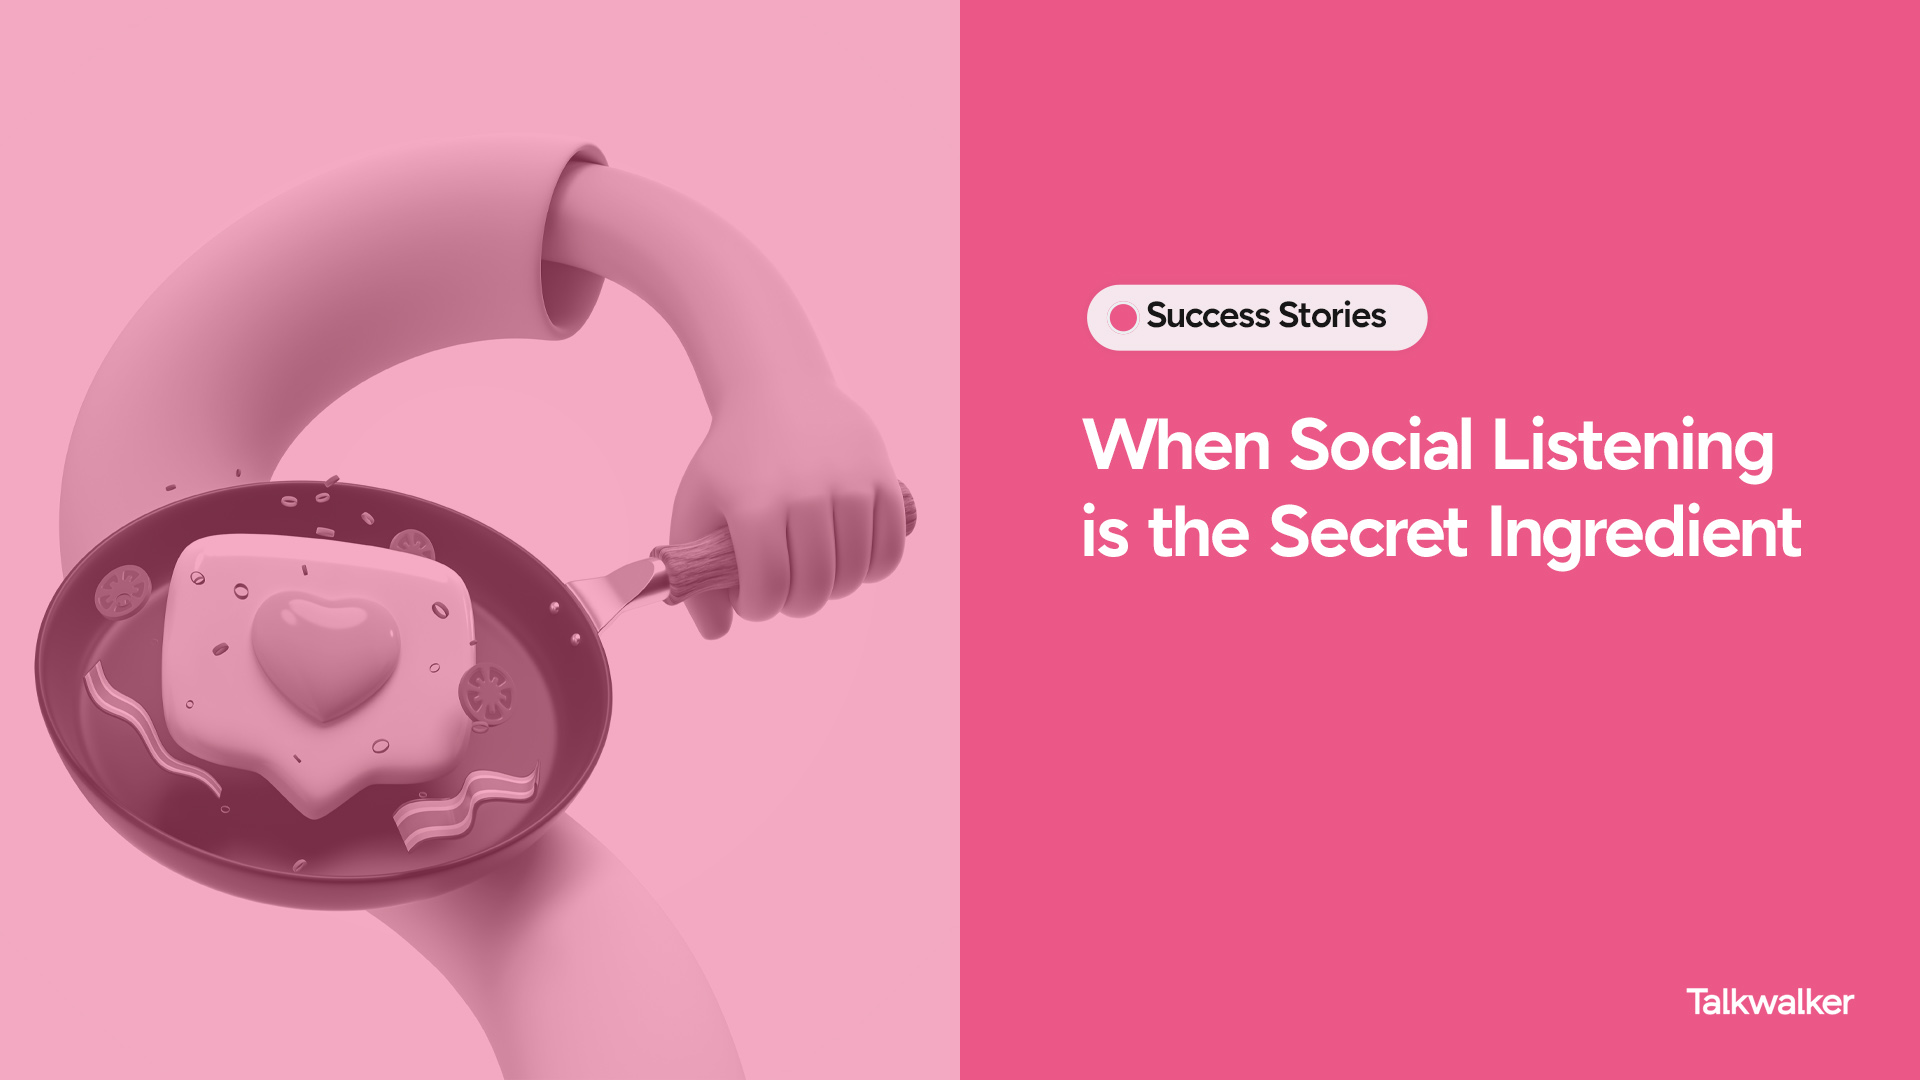 HelloFresh: When Social Listening Is the Secret Ingredient